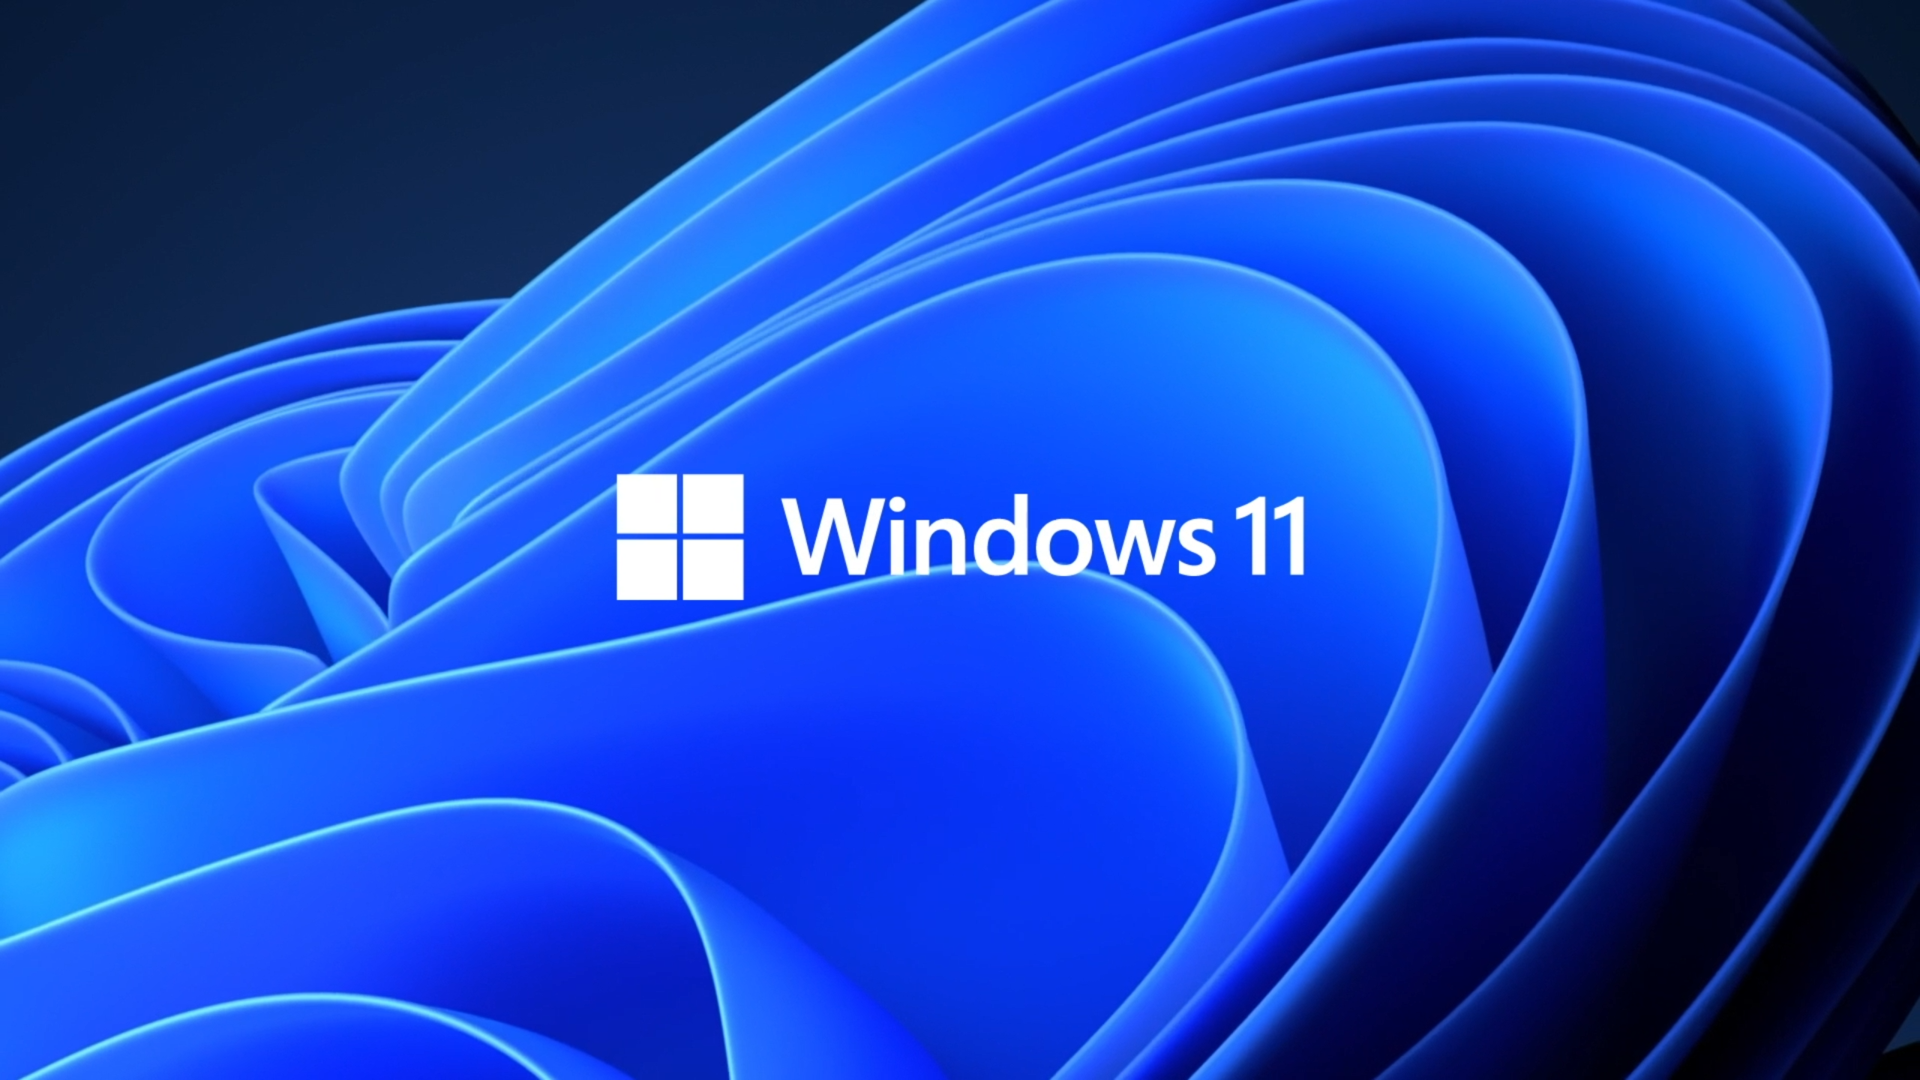 Windows 11 Wallpaper Windows 11 Background Download